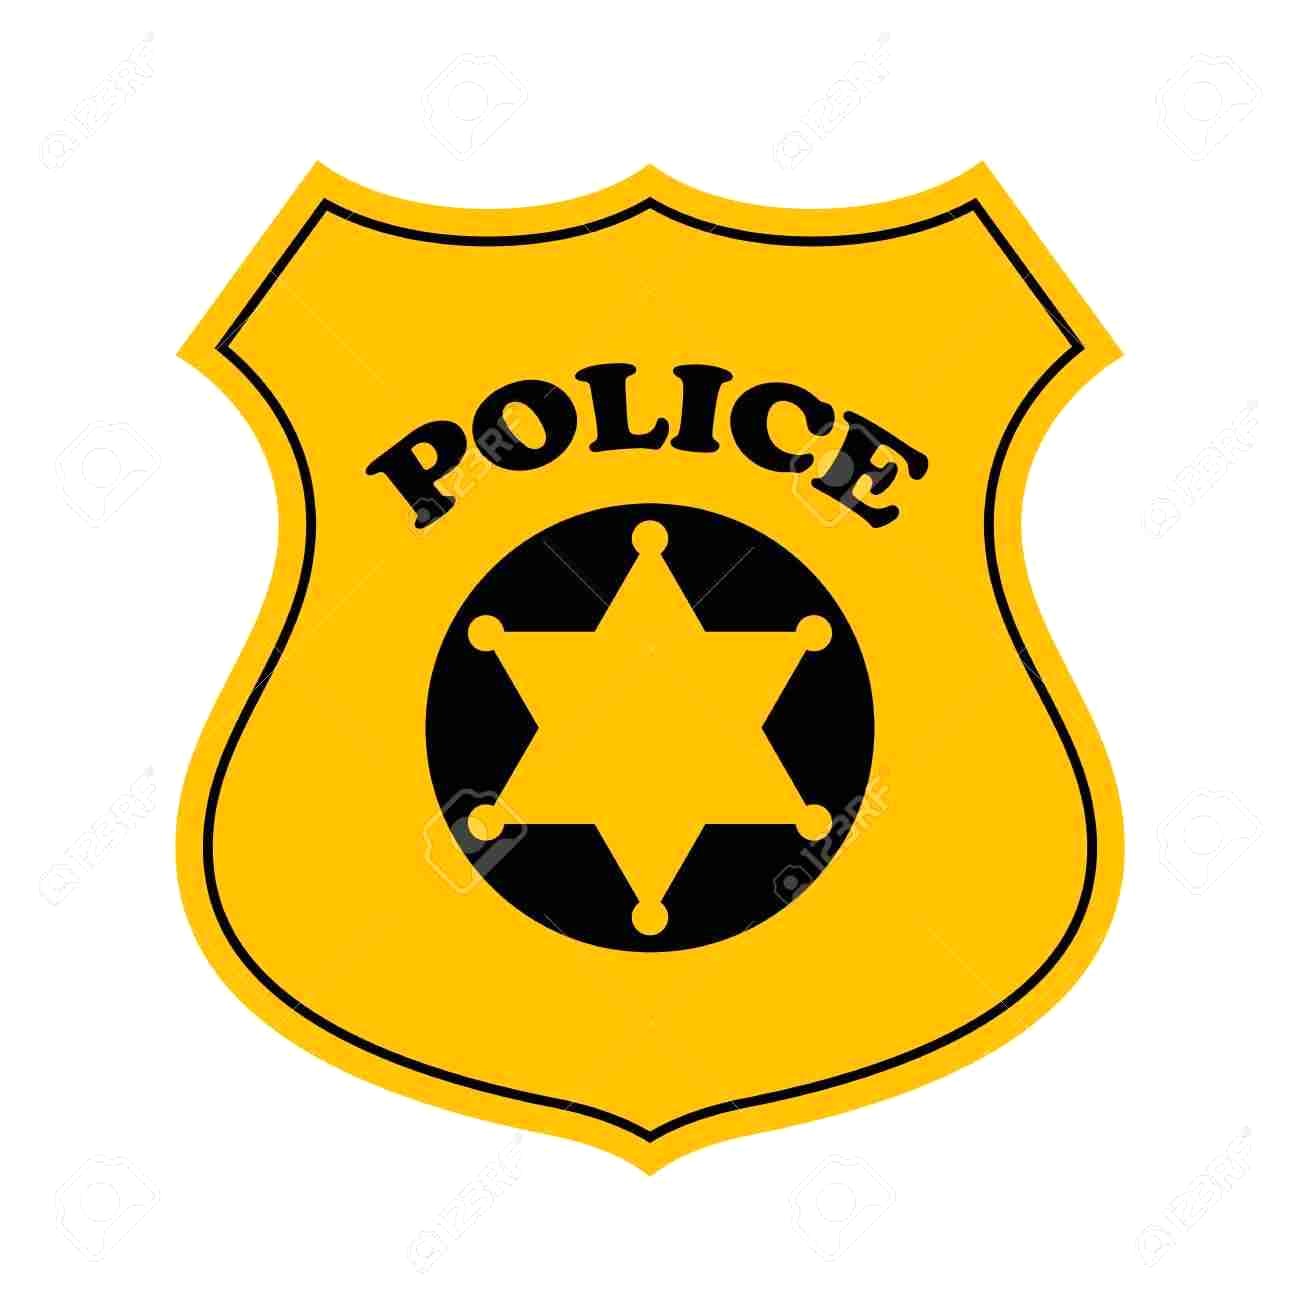 Police officer badge.